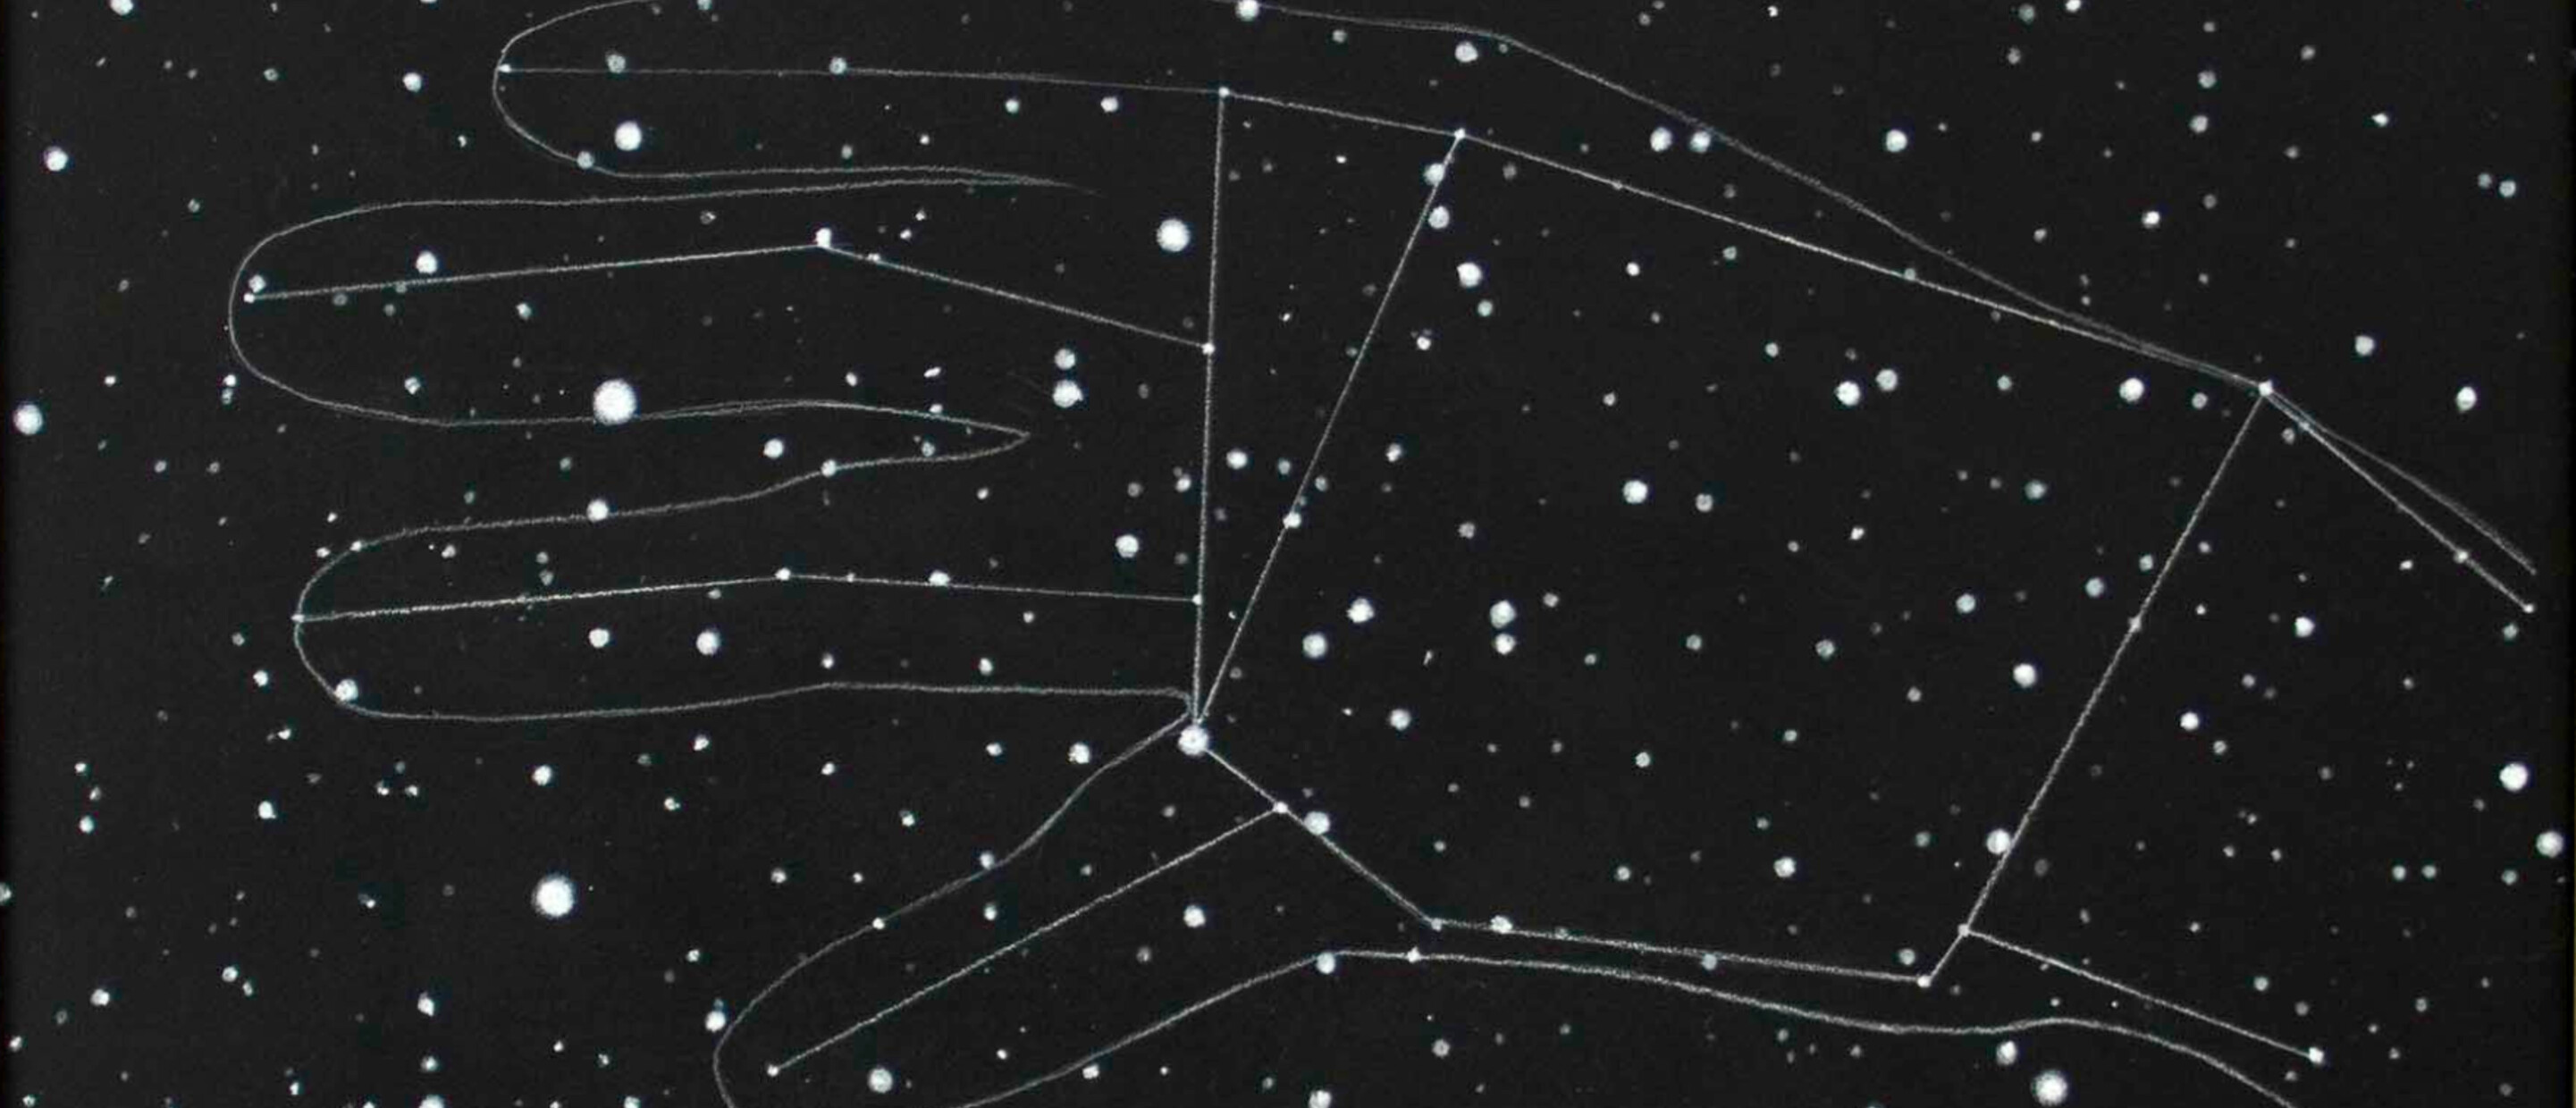 star constellation with hand